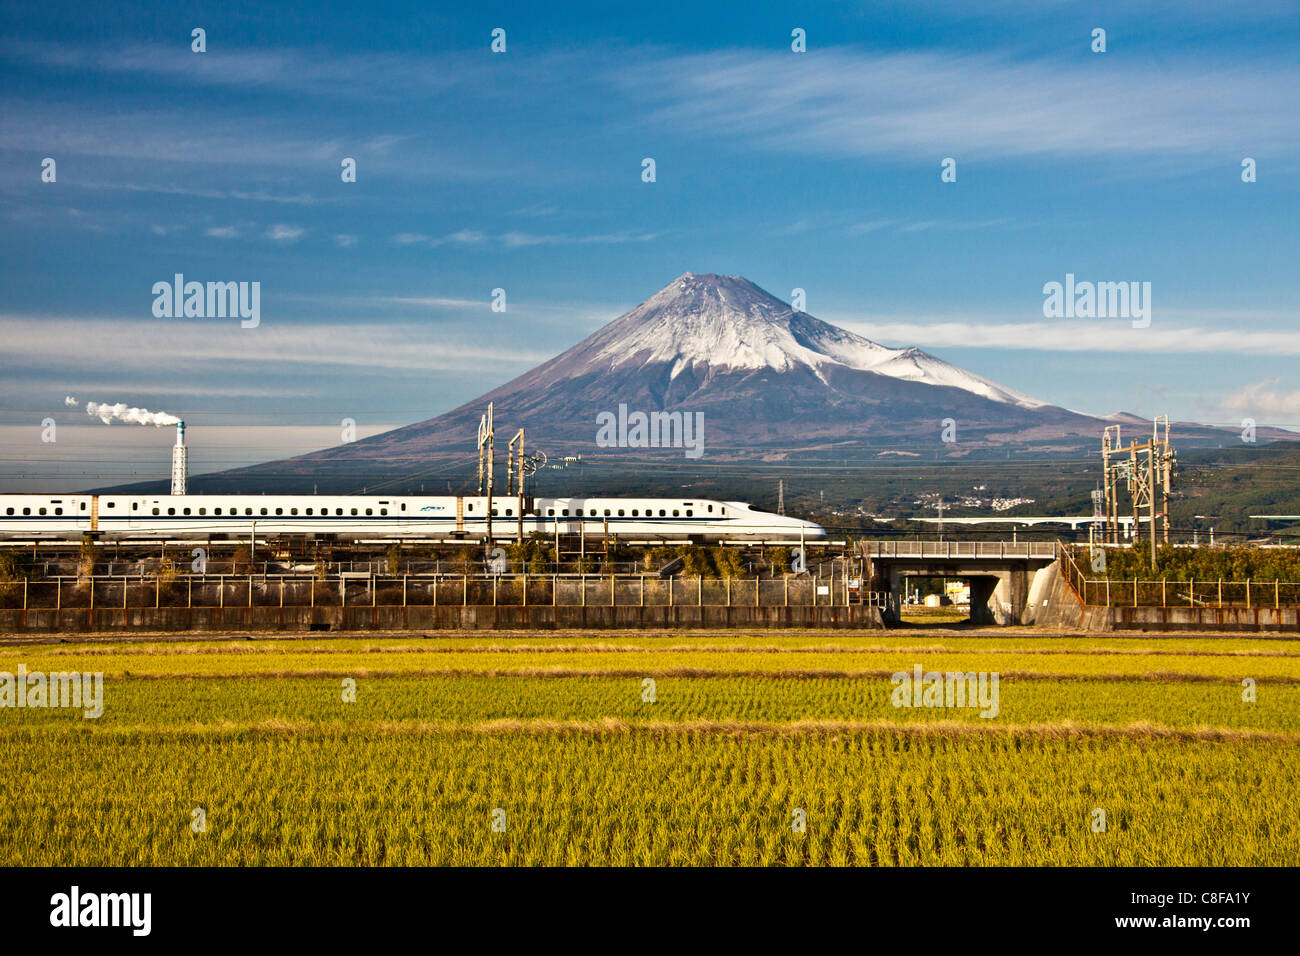 Japan, November, Asien, Fuji, Stadt, Berg Fuji, TGV, Shinkansen, Landschaft, Landwirtschaft, Reisfeld, Anbau von Ric Stockfoto